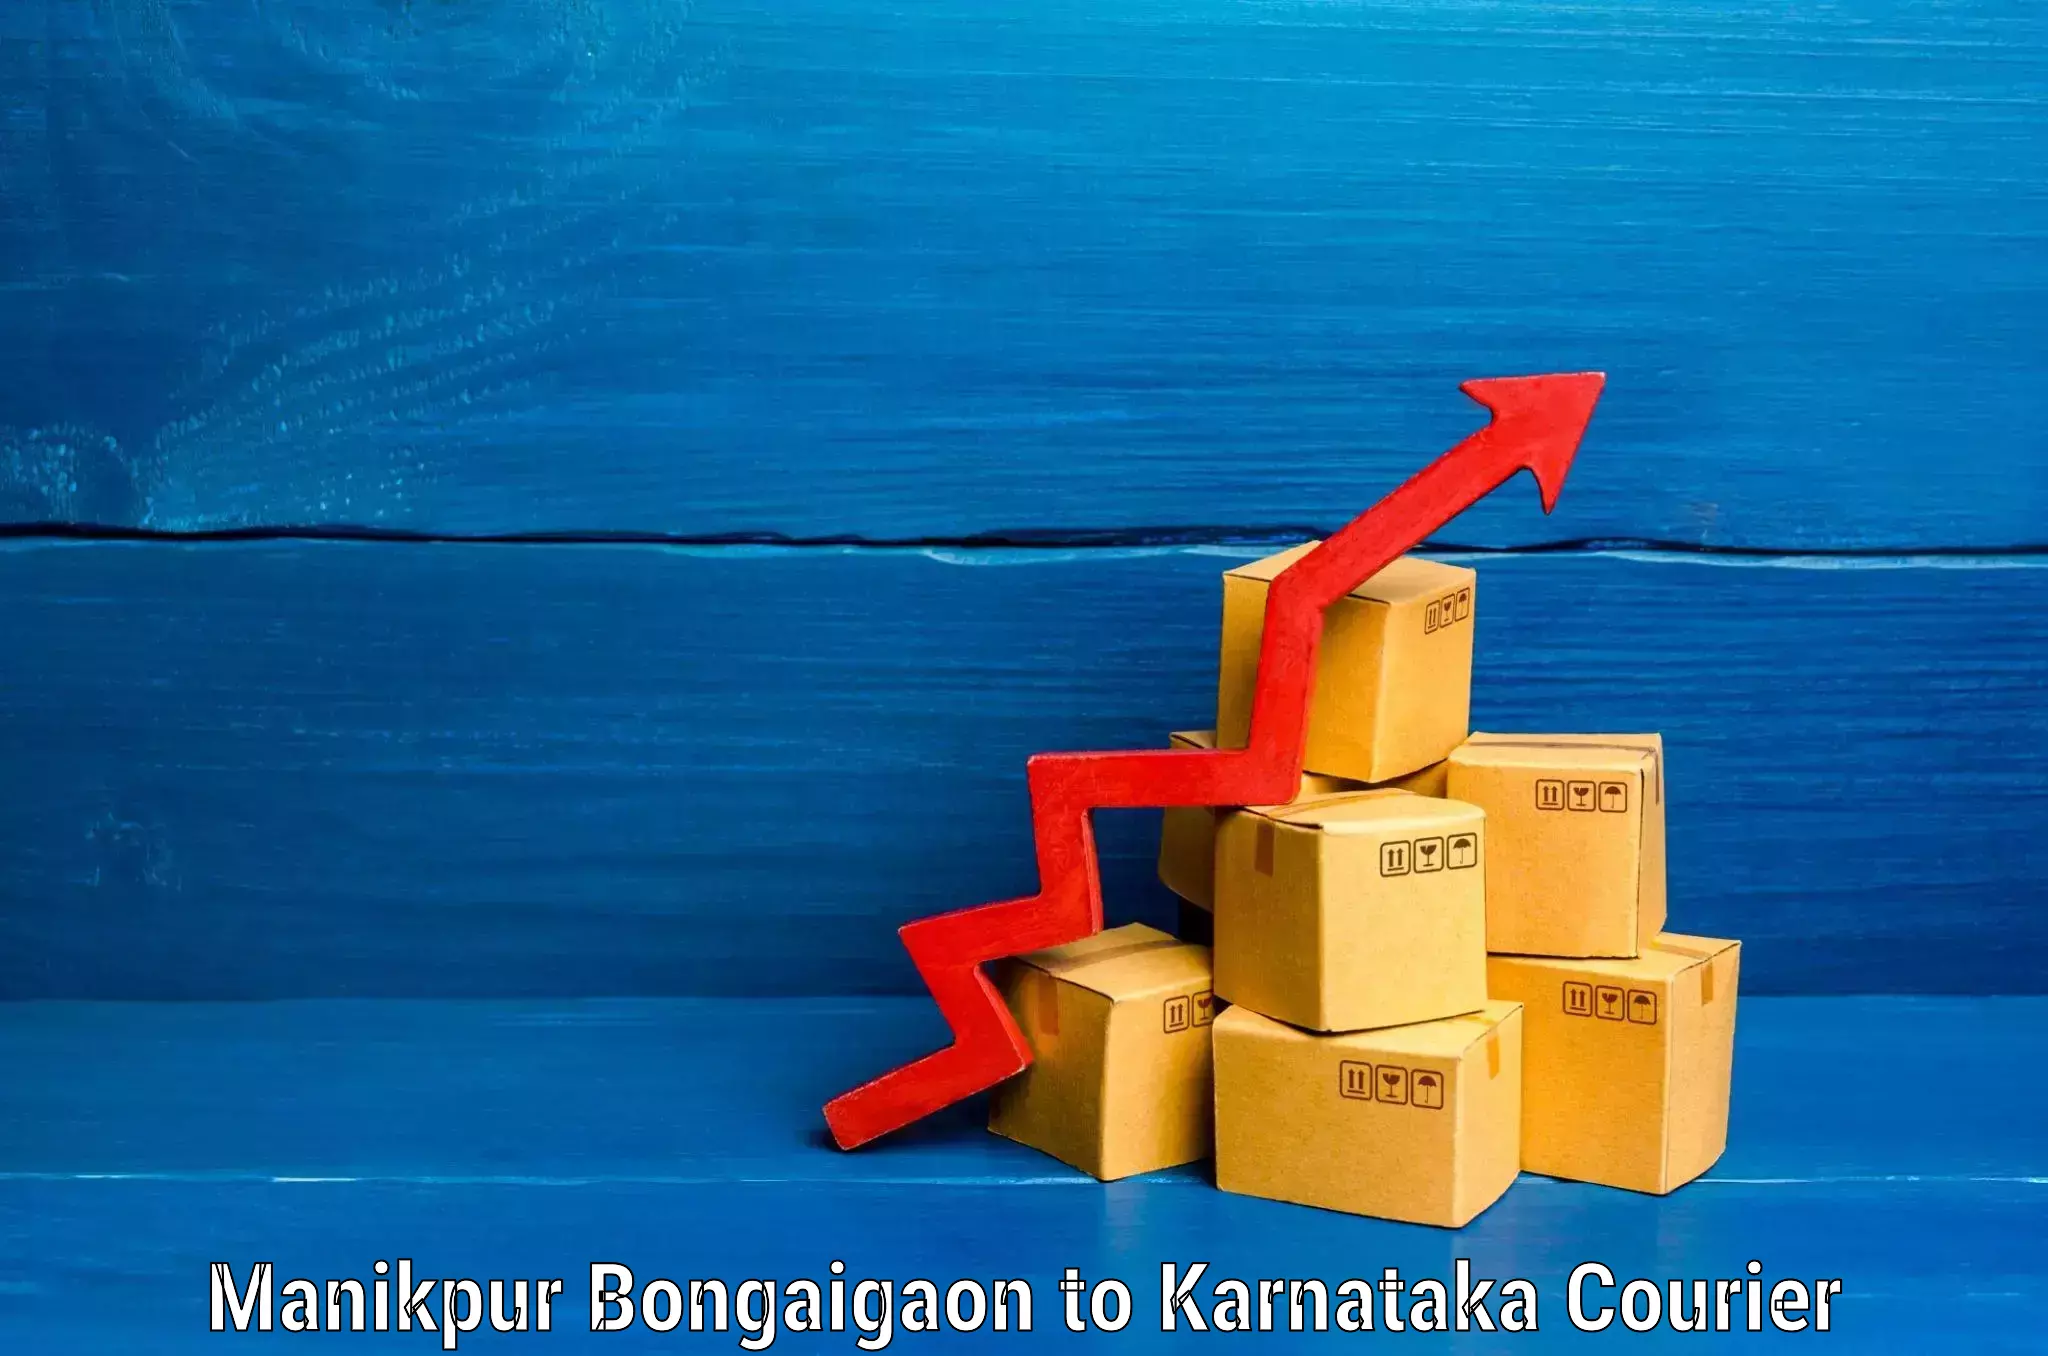 Luggage transport consultancy Manikpur Bongaigaon to Karnataka